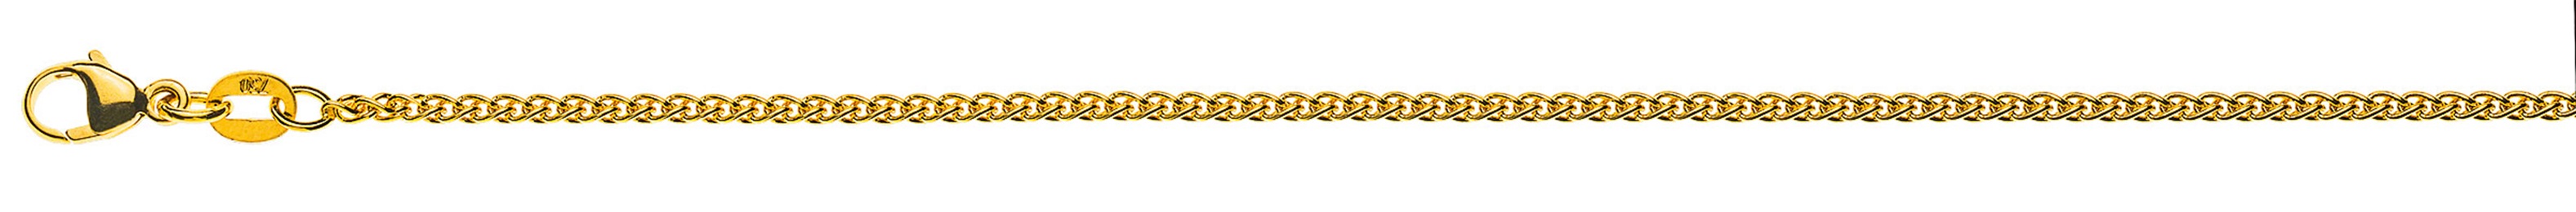 AURONOS Prestige Necklace yellow gold 18K cable chain 38cm 1.6mm